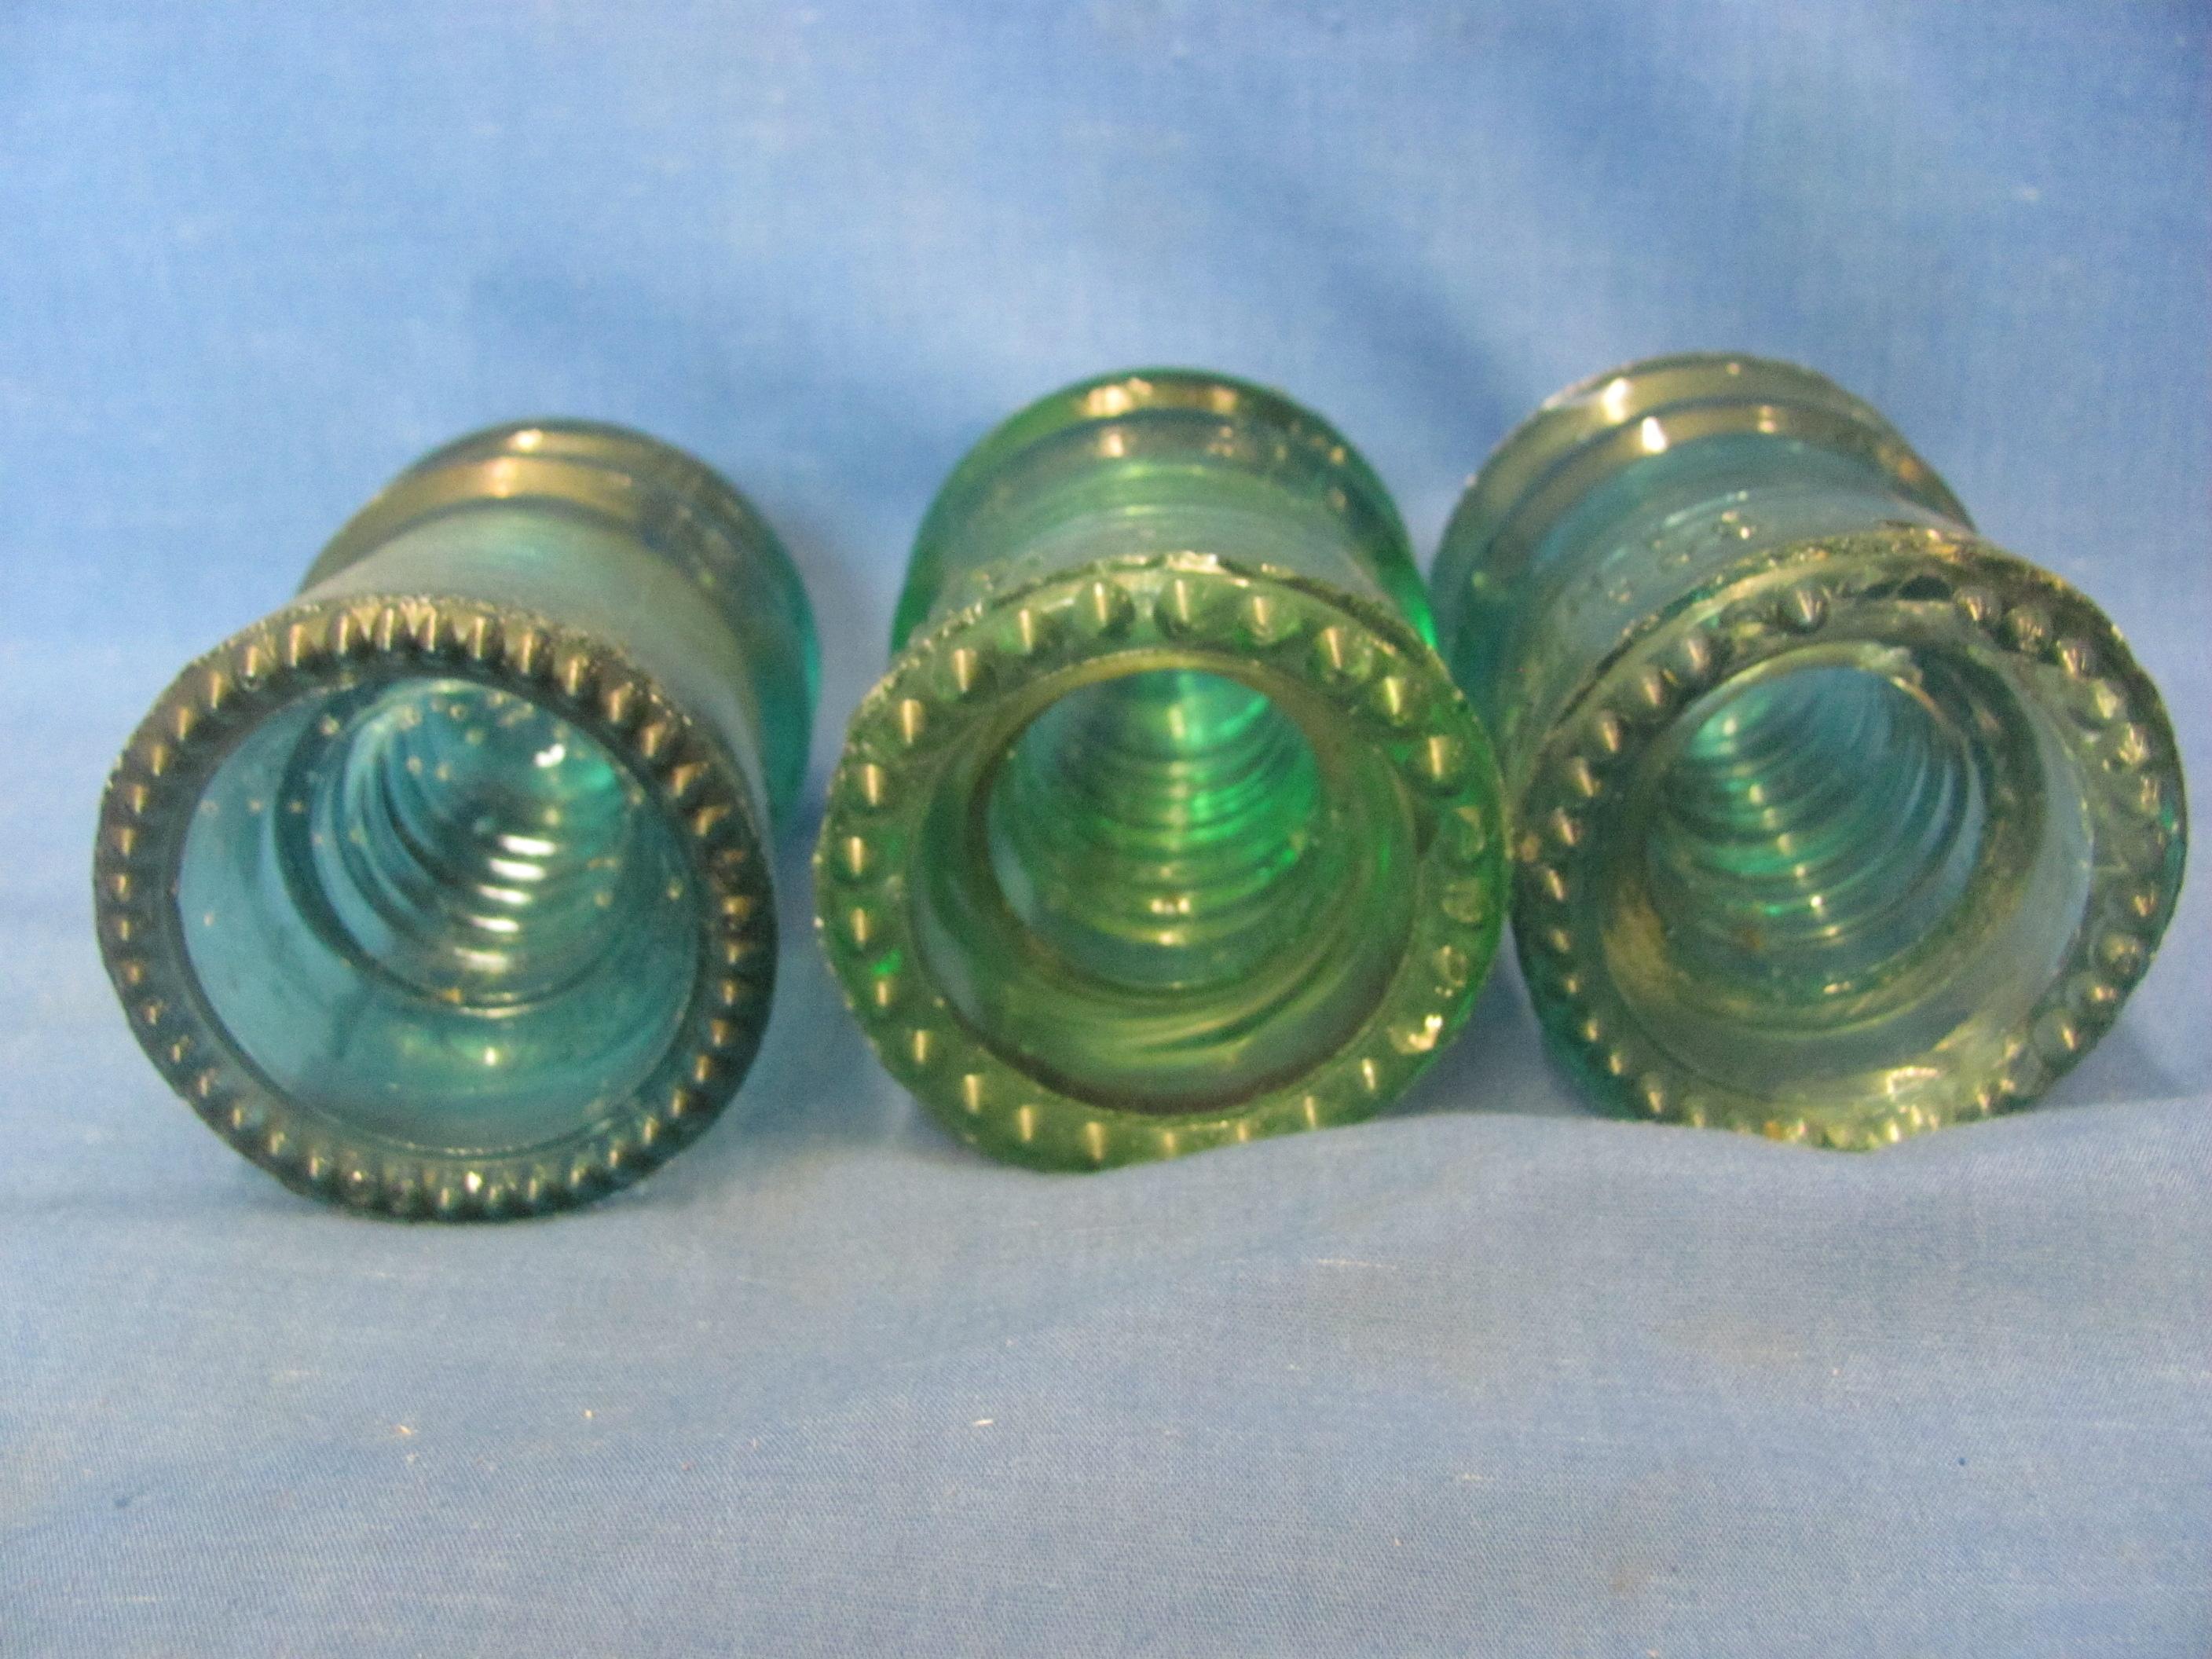 Hemingway & Brookfield Glass Insulators (17) – Olive Green - Cobalt Blue – Clear – Blue